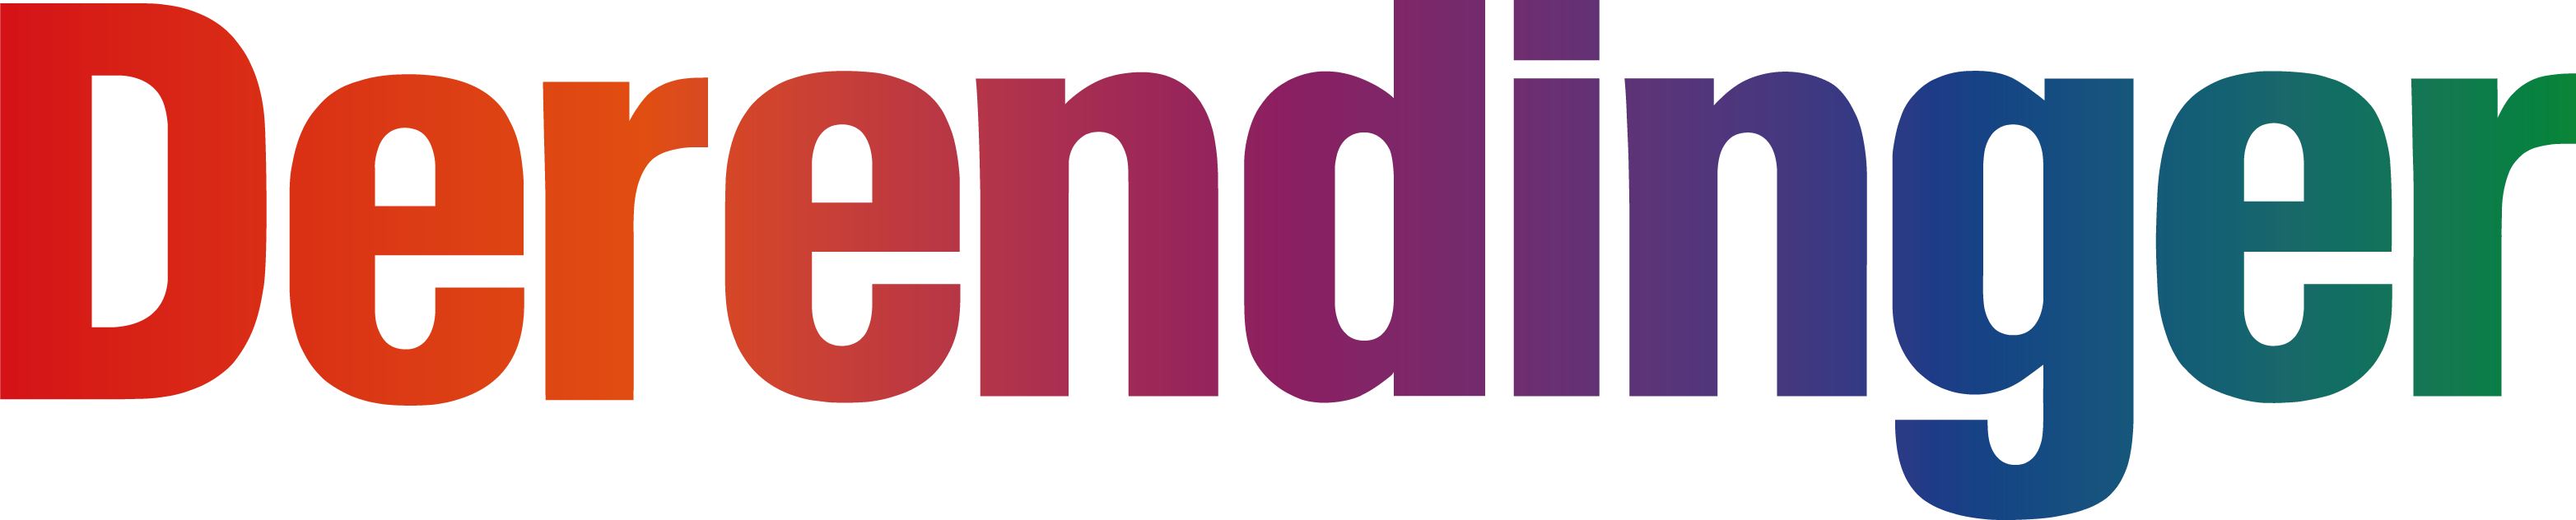 Derendinger-logo